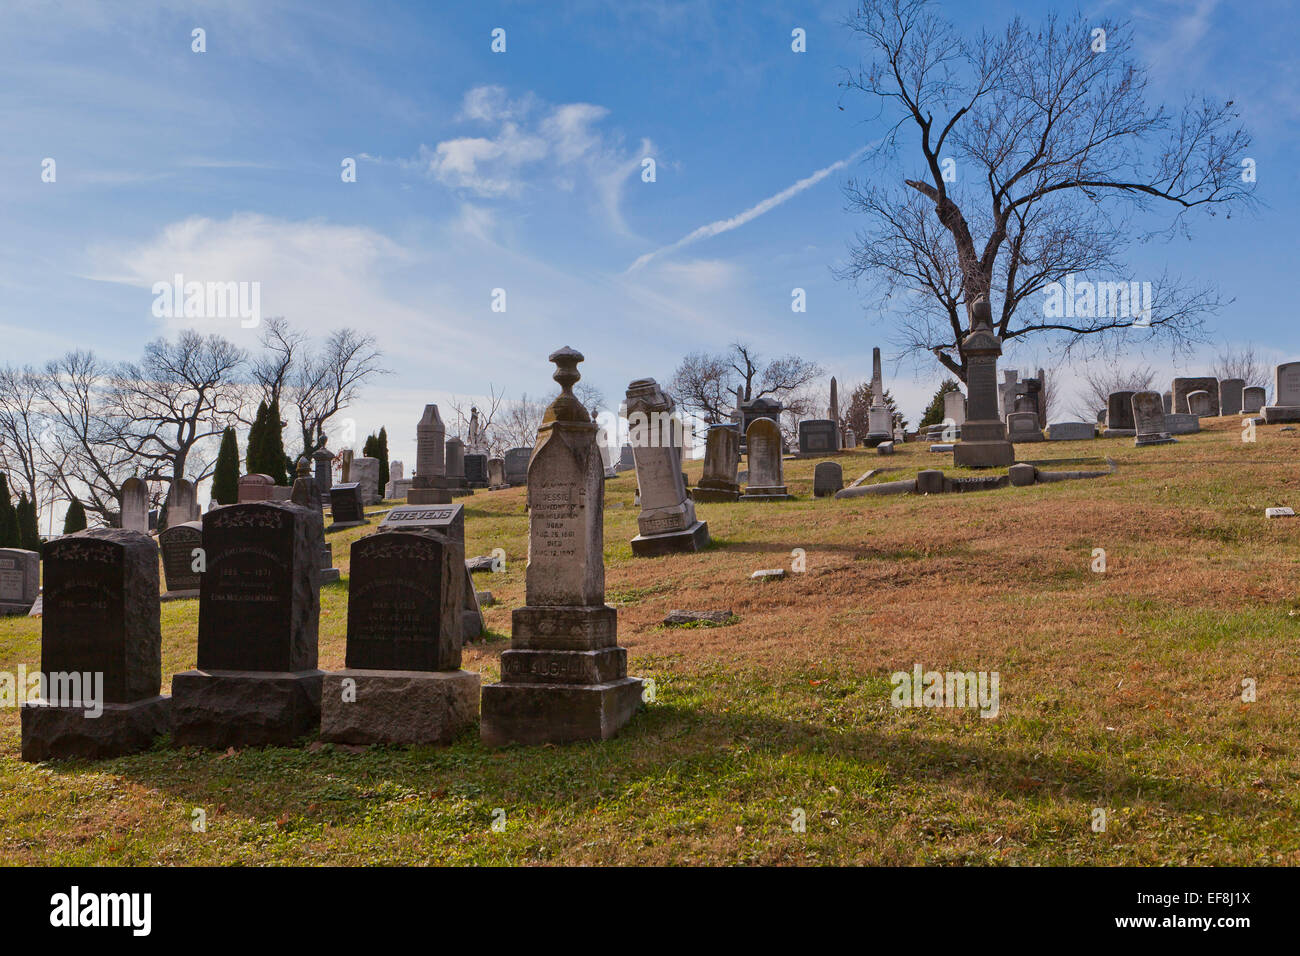 Congressional cemetery - Washington, DC USA Stock Photo